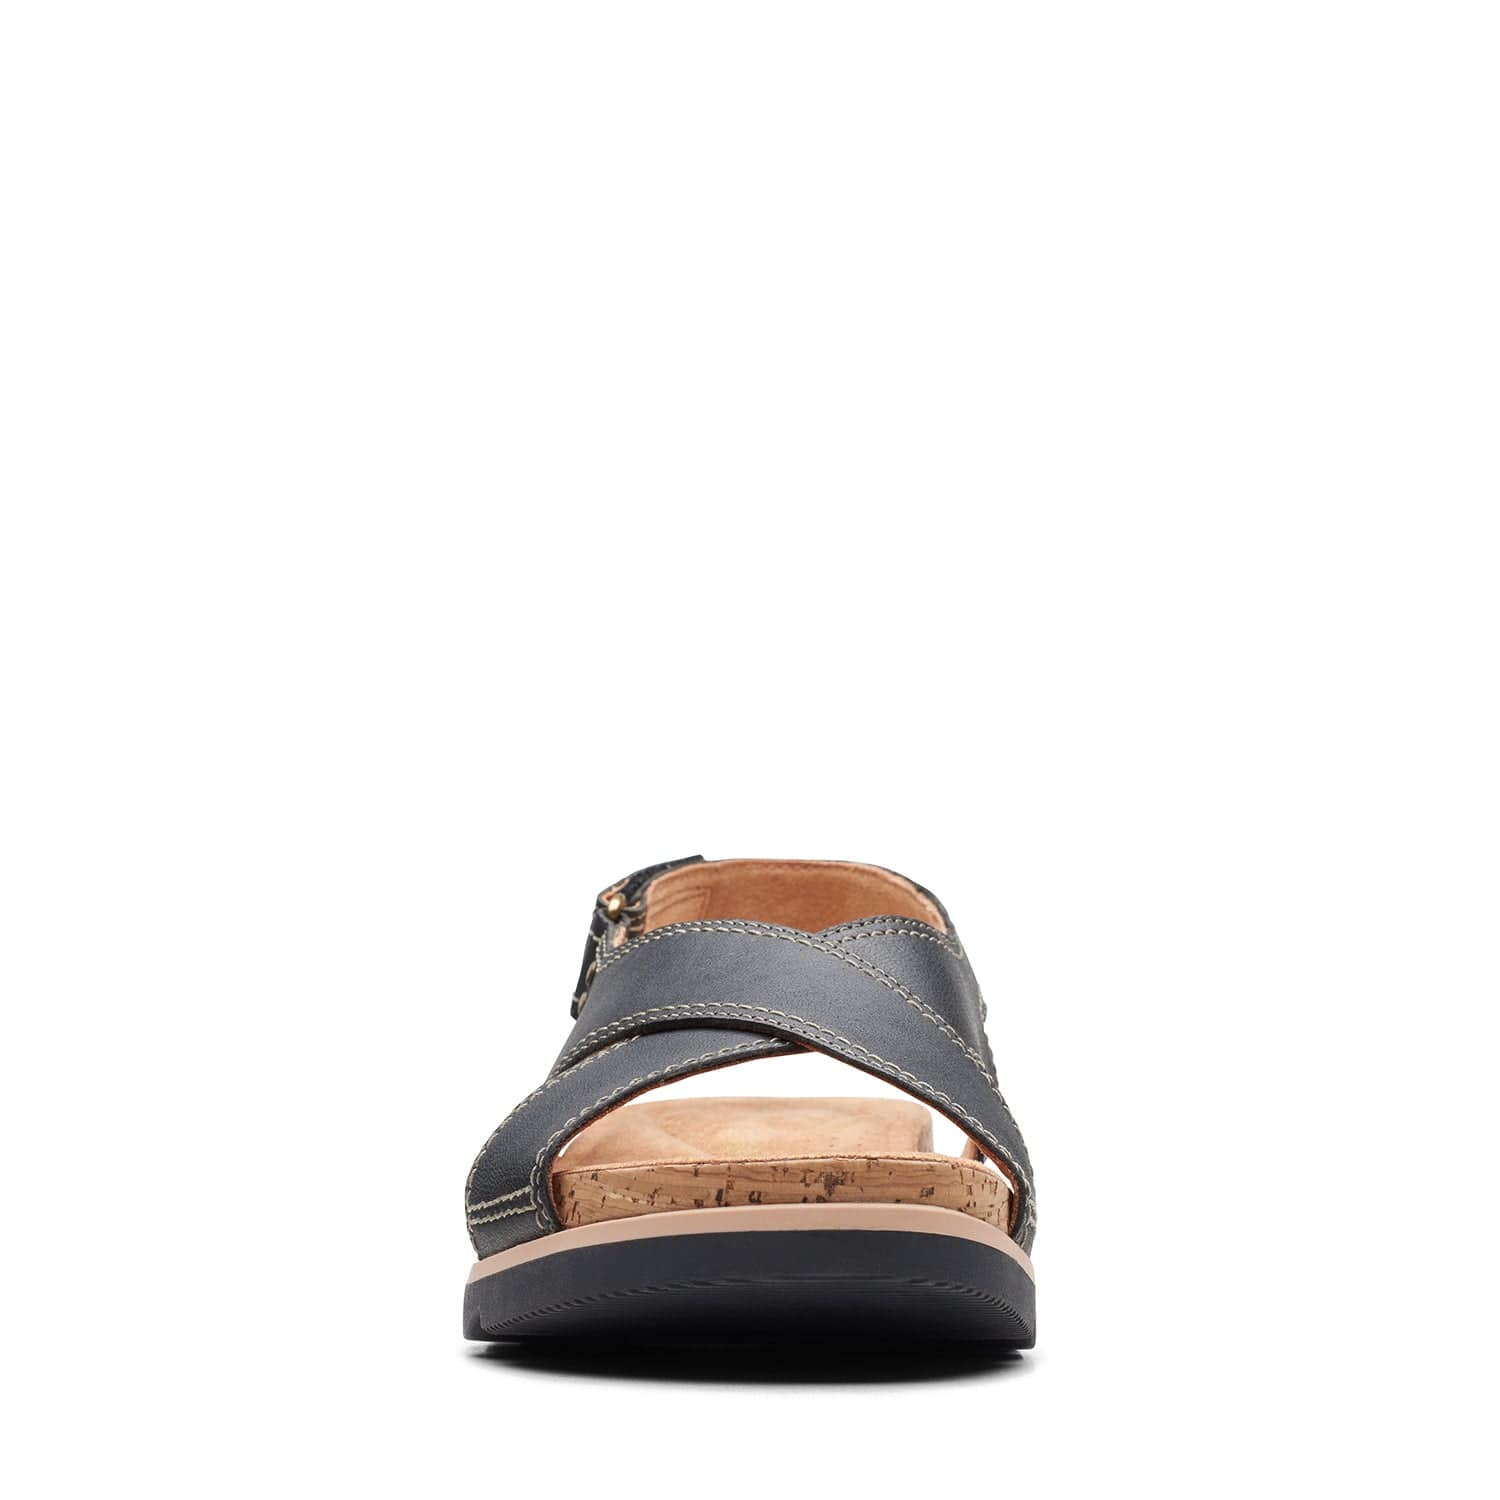 Clarks Yacht Cross - Sandals - Black Leather - 261721525 - E Width (Wide Fit)